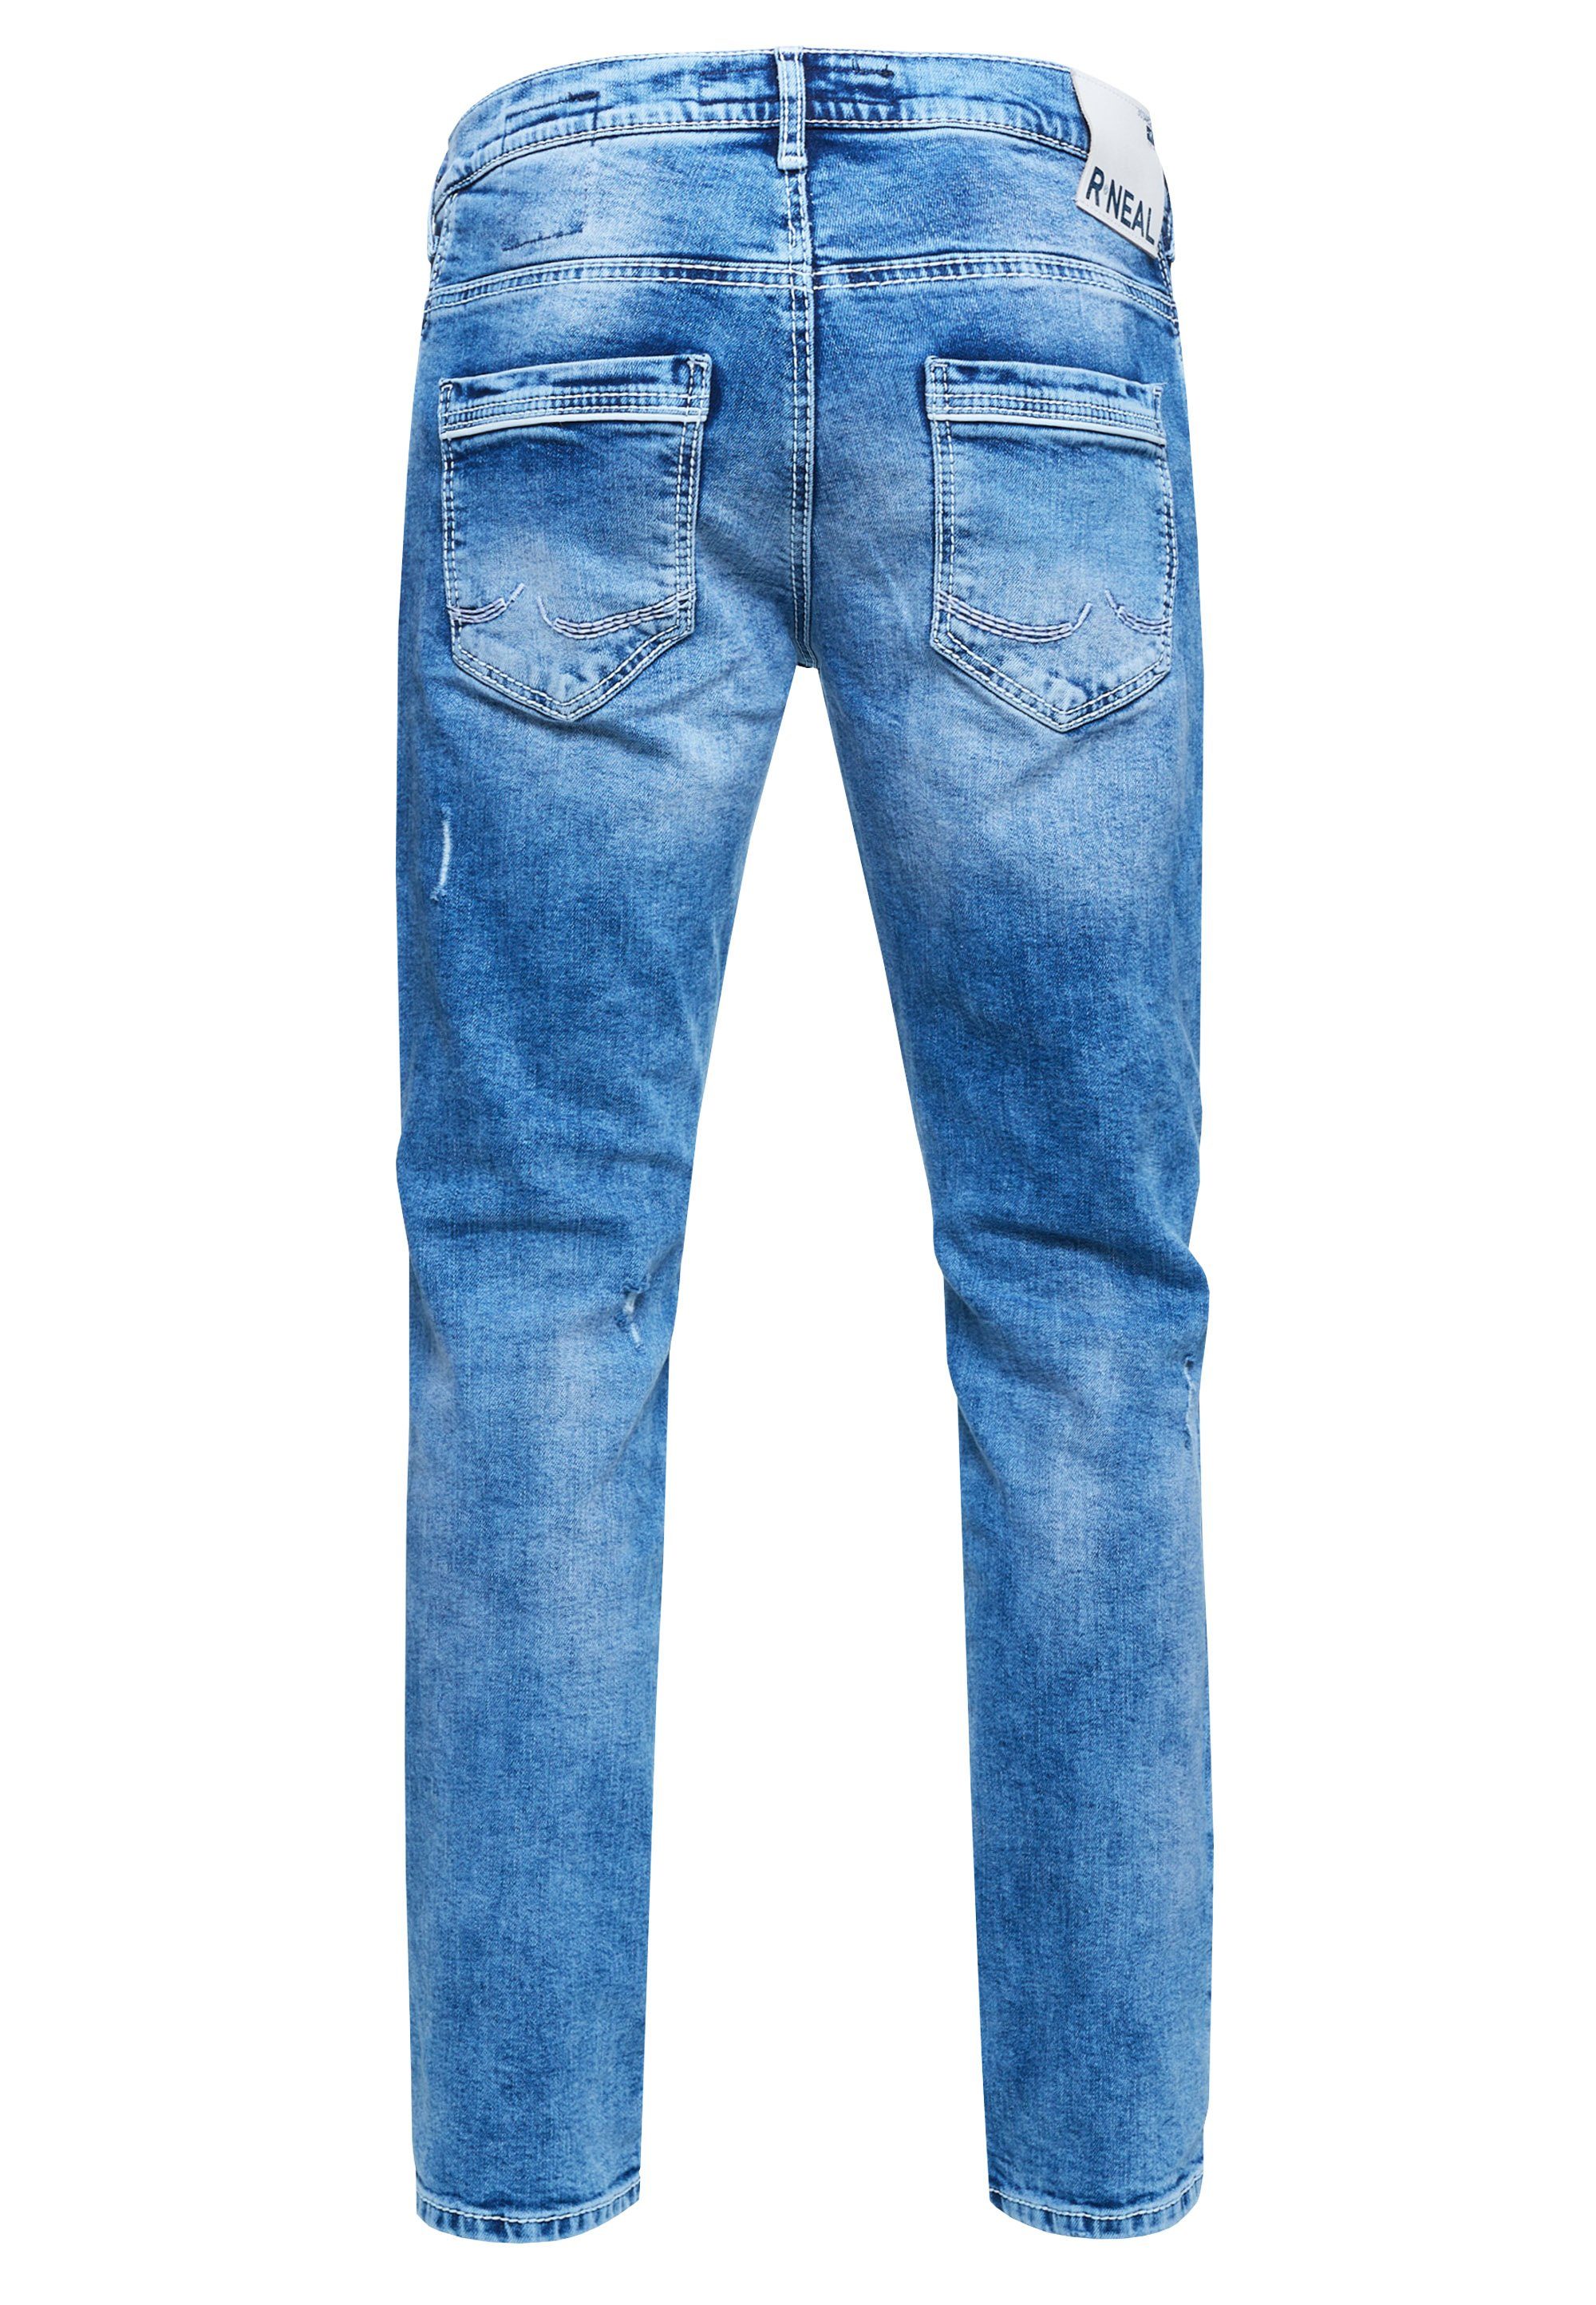 NISHO blau Neal Straight-Jeans Used-Details mit Rusty trendigen